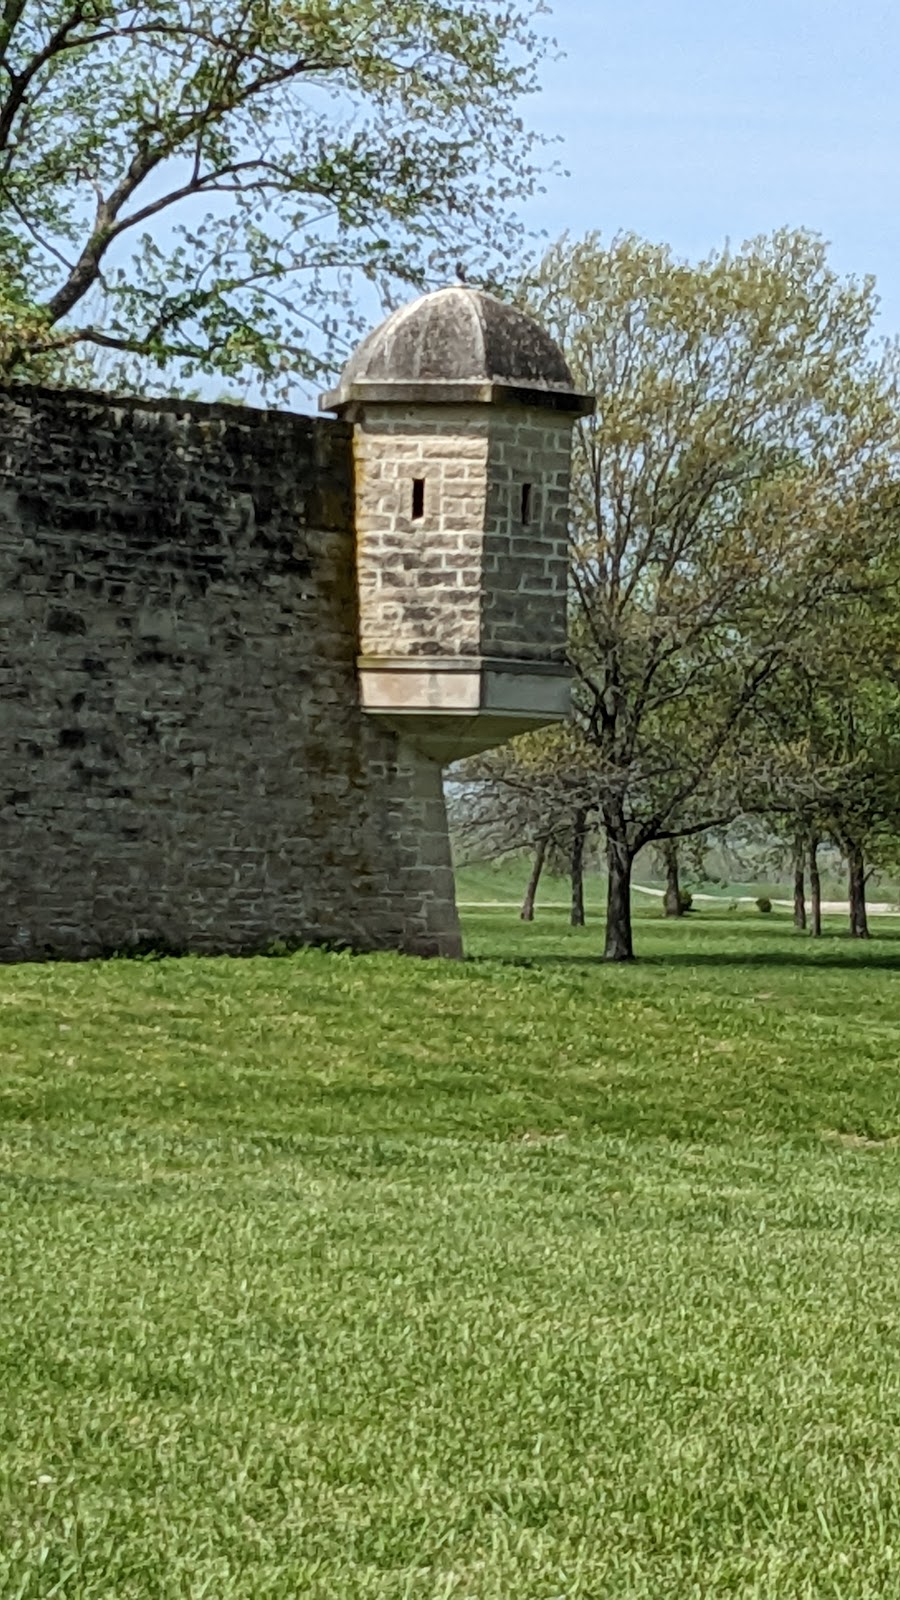 Fort de Chartres State Historic Site | 2006, 1350 State Rte 155, Prairie Du Rocher, IL 62277, USA | Phone: (618) 284-7230